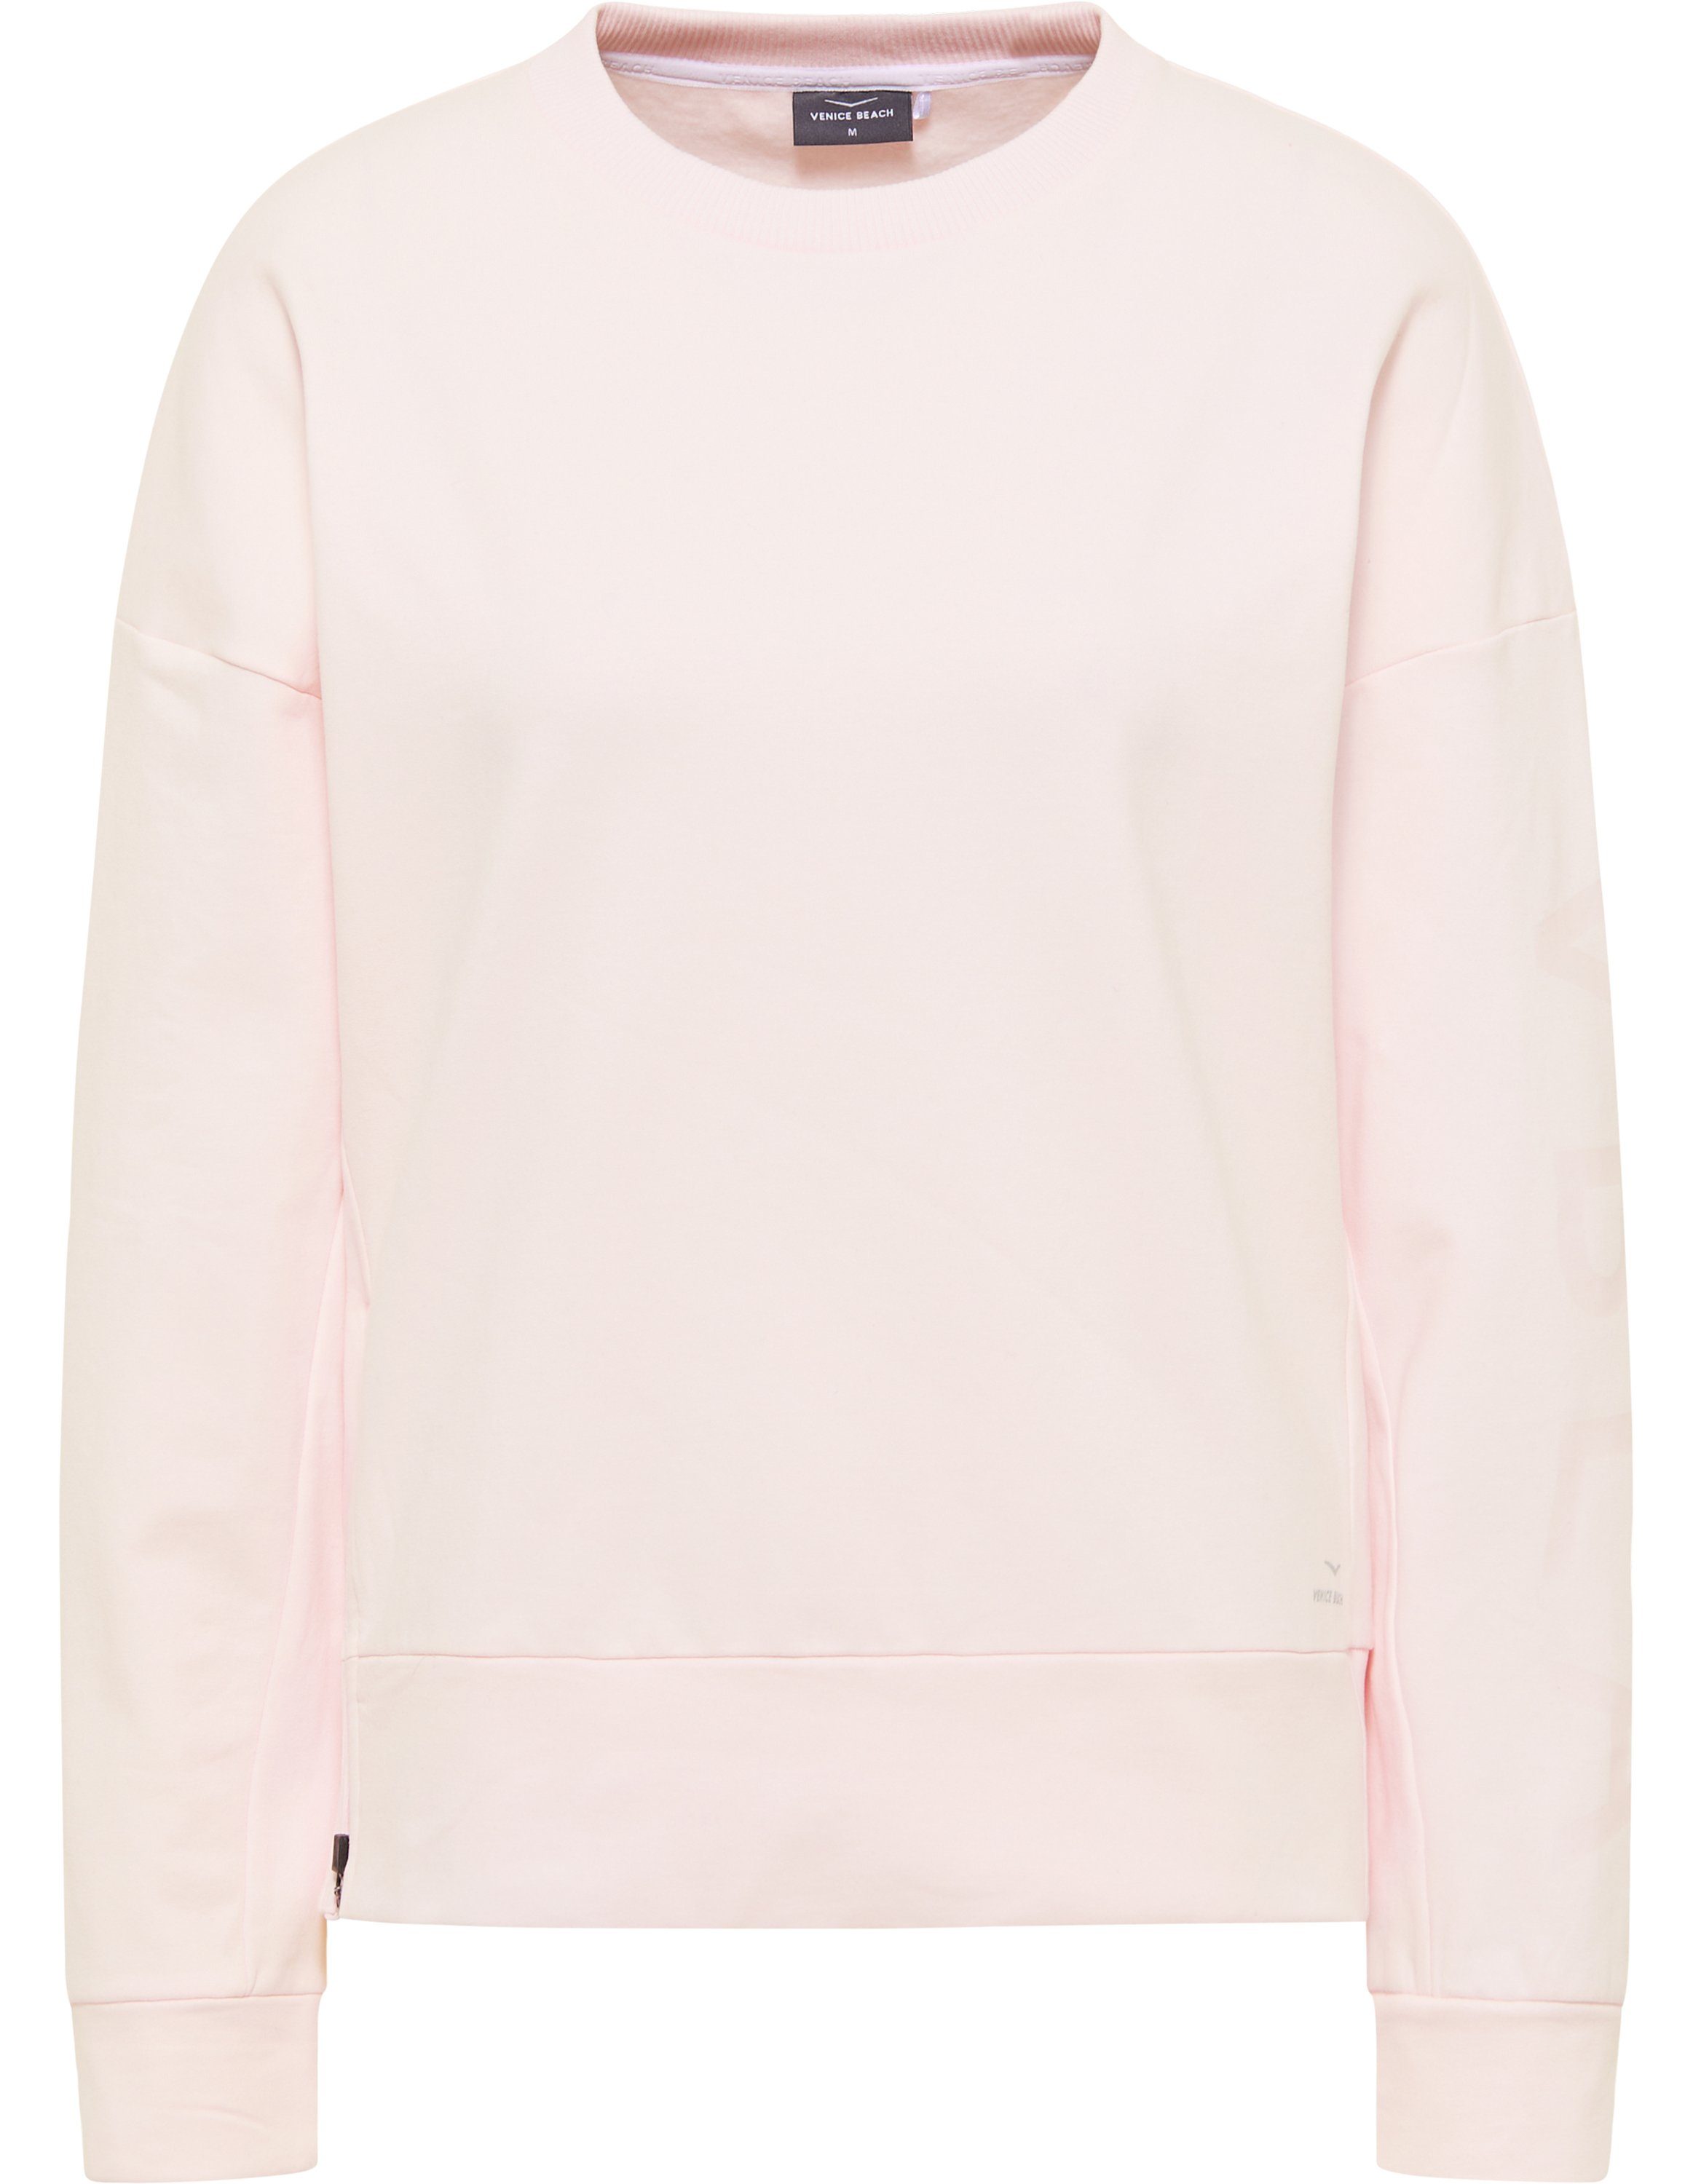 Venice Beach Sweatshirt Sweatshirt VB EMMA blush pink